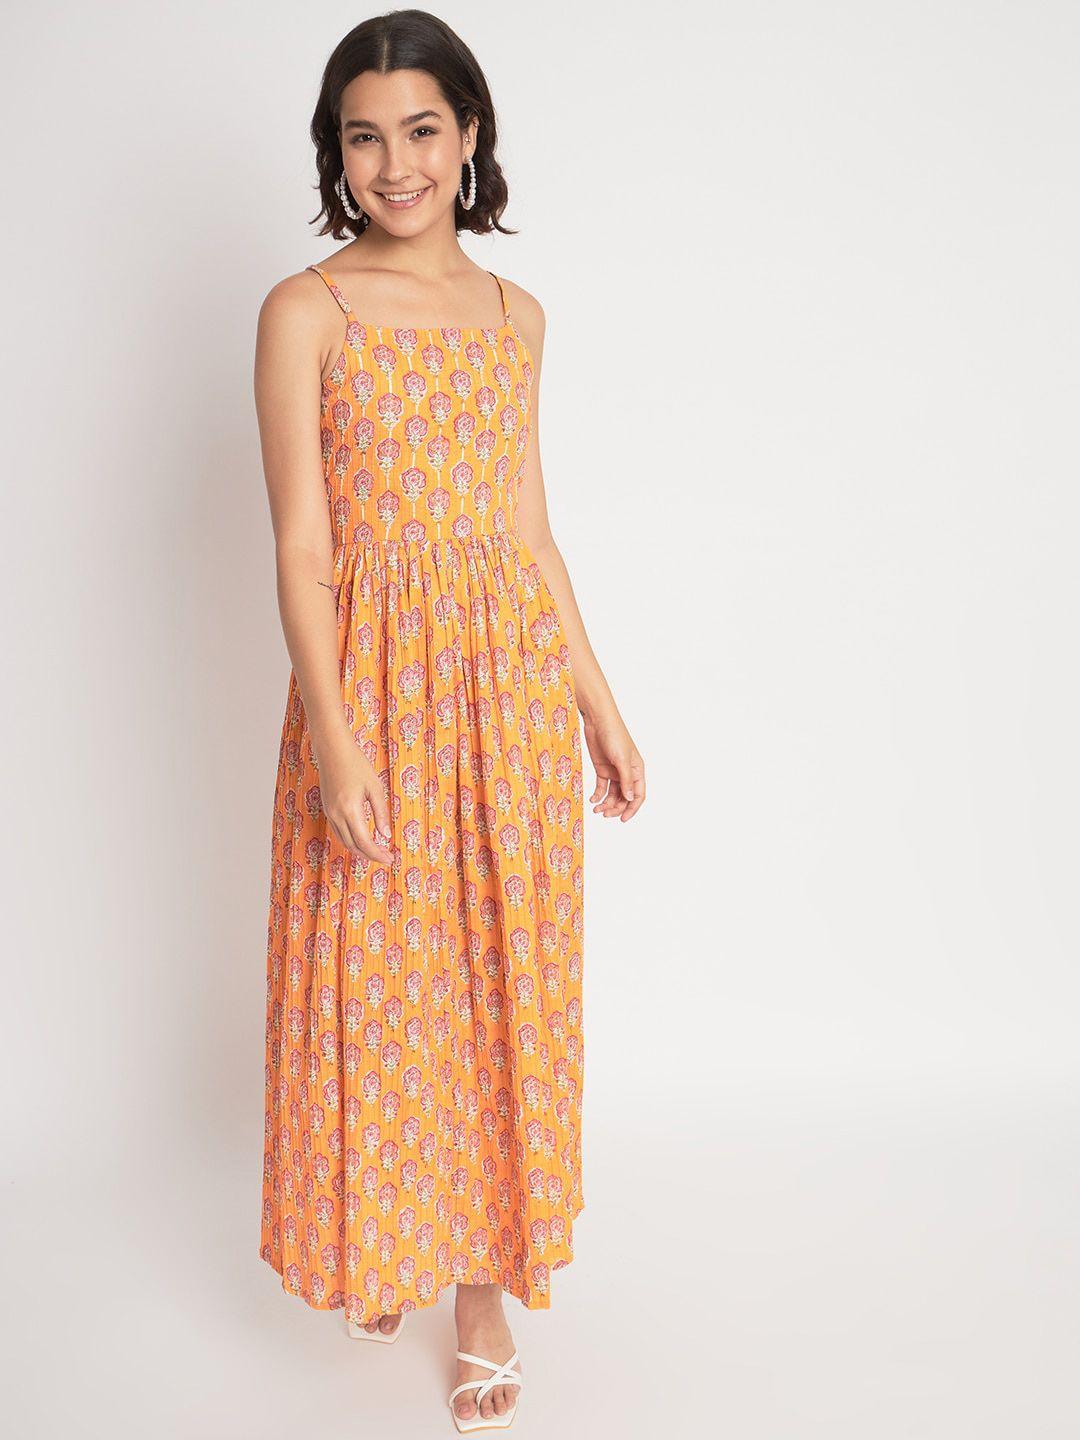 salwat floral printed shoulder straps cotton maxi dress